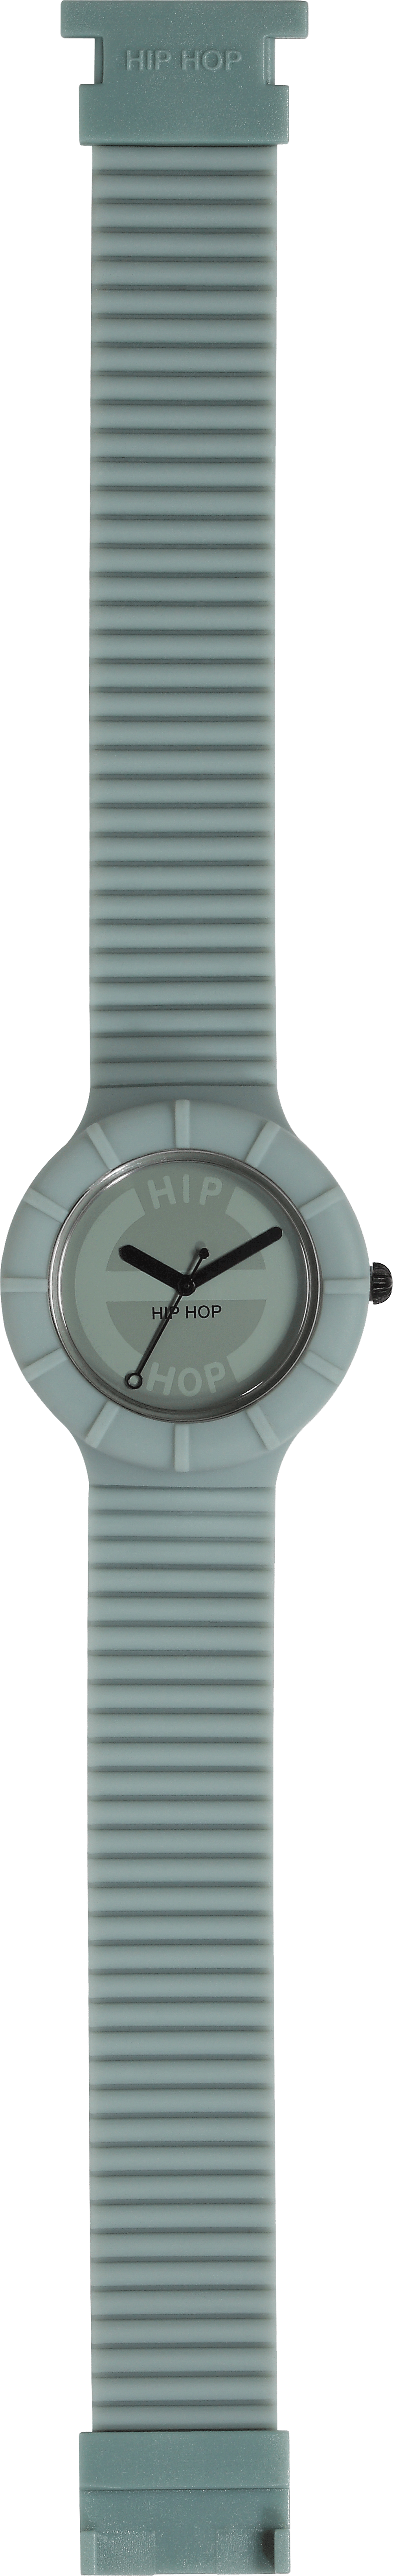 Foto Hip Hop Reloj unisex Full Colour HWU0055